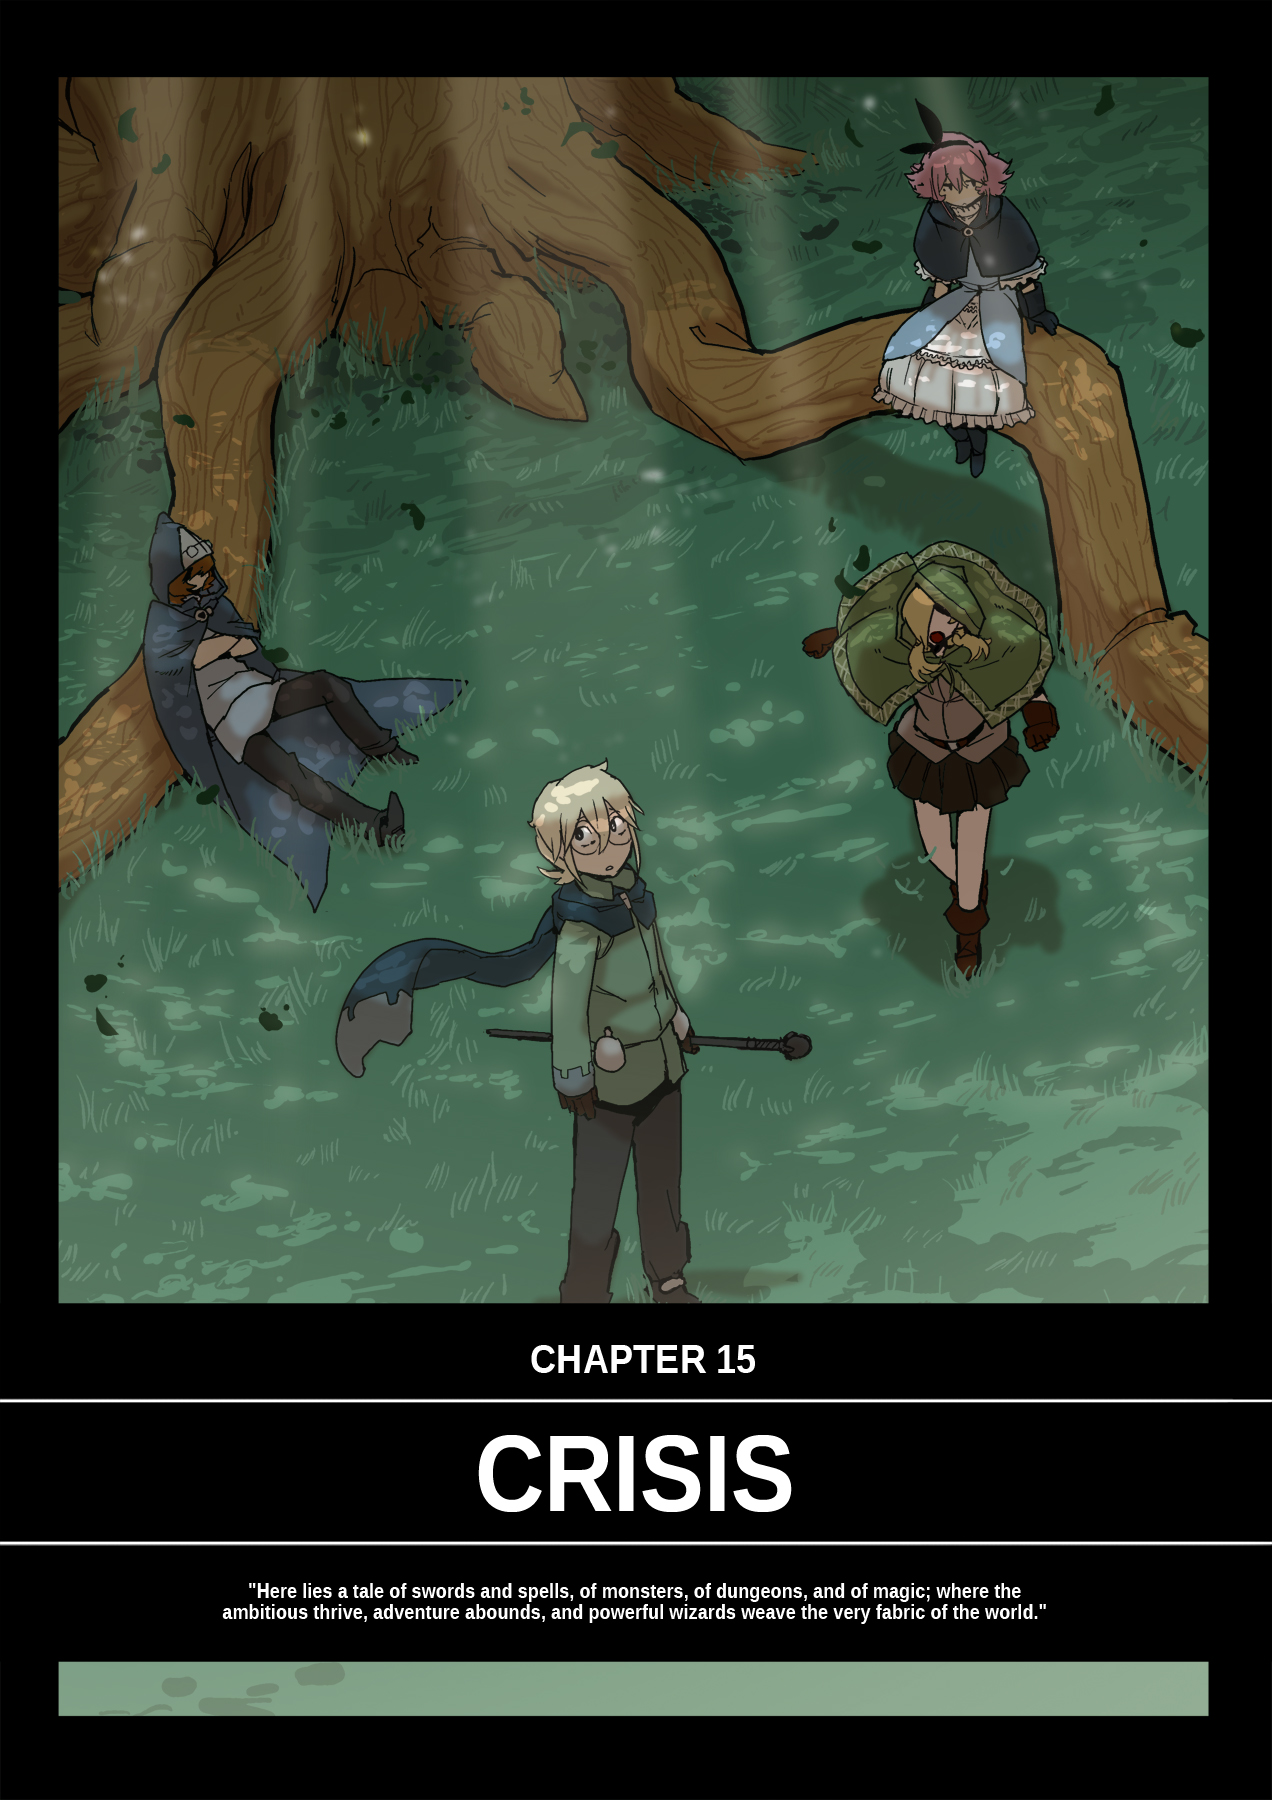 Spellcross Ch. 15 Crisis